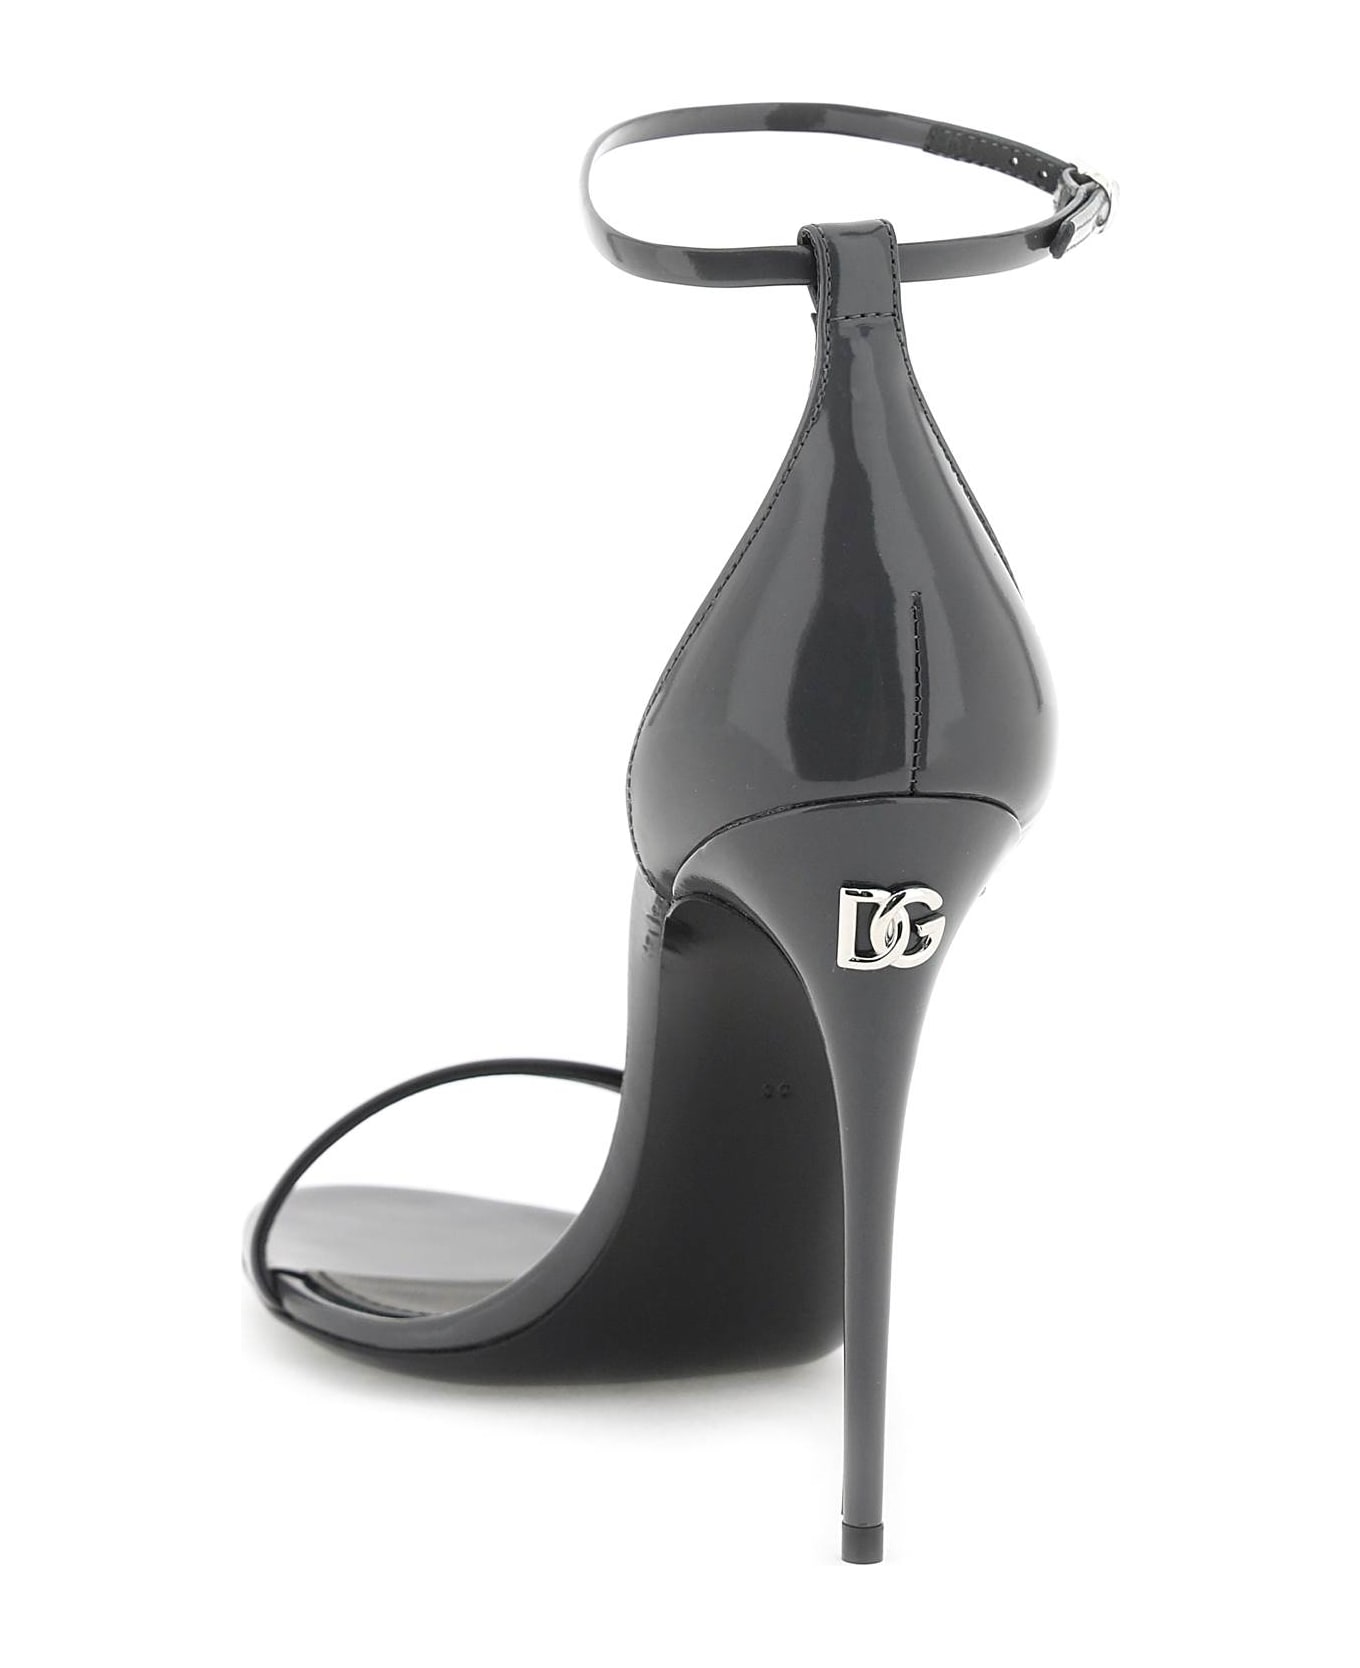 Dolce & Gabbana Patent Leather Sandals - Grigio